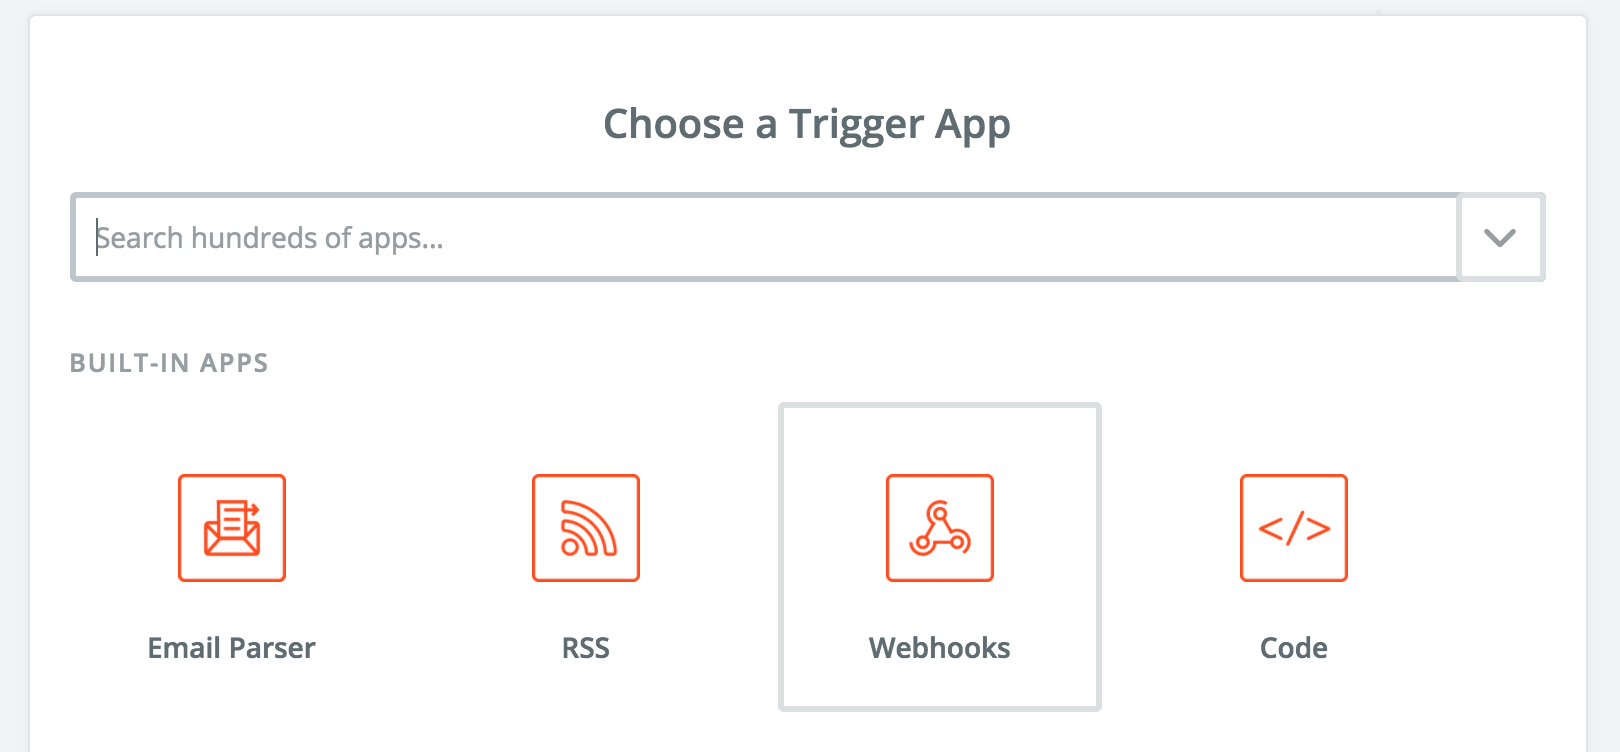 Choosing webhooks as Trigger App